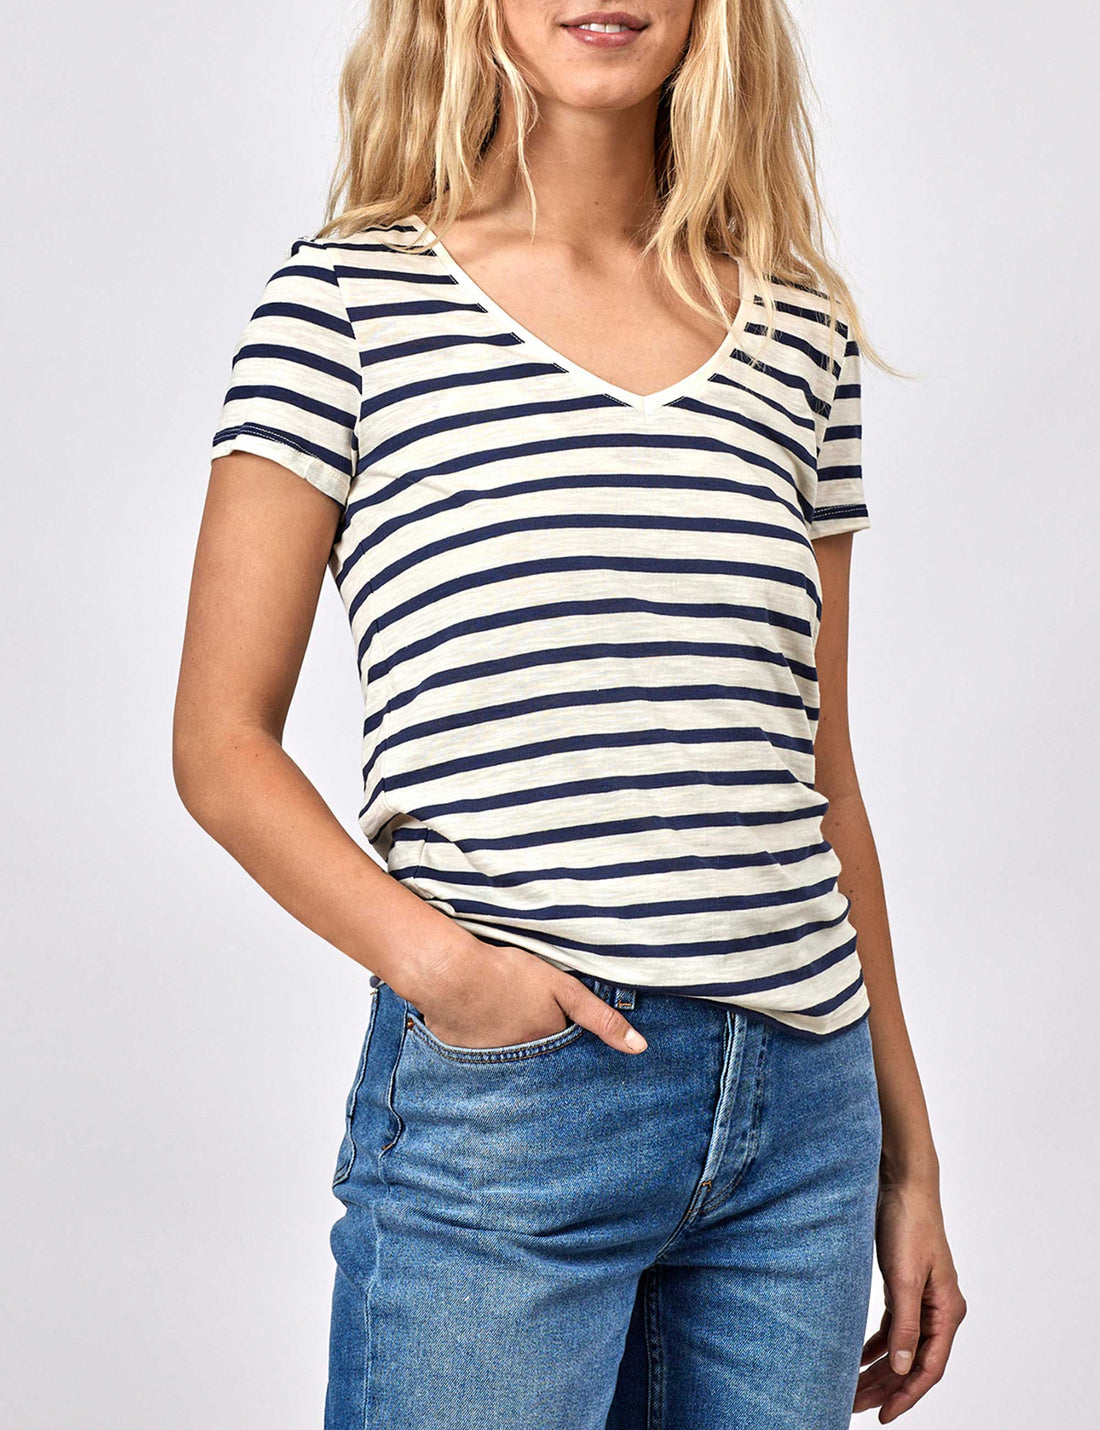 Coco short sleeve t-shirt navy/cream stripe